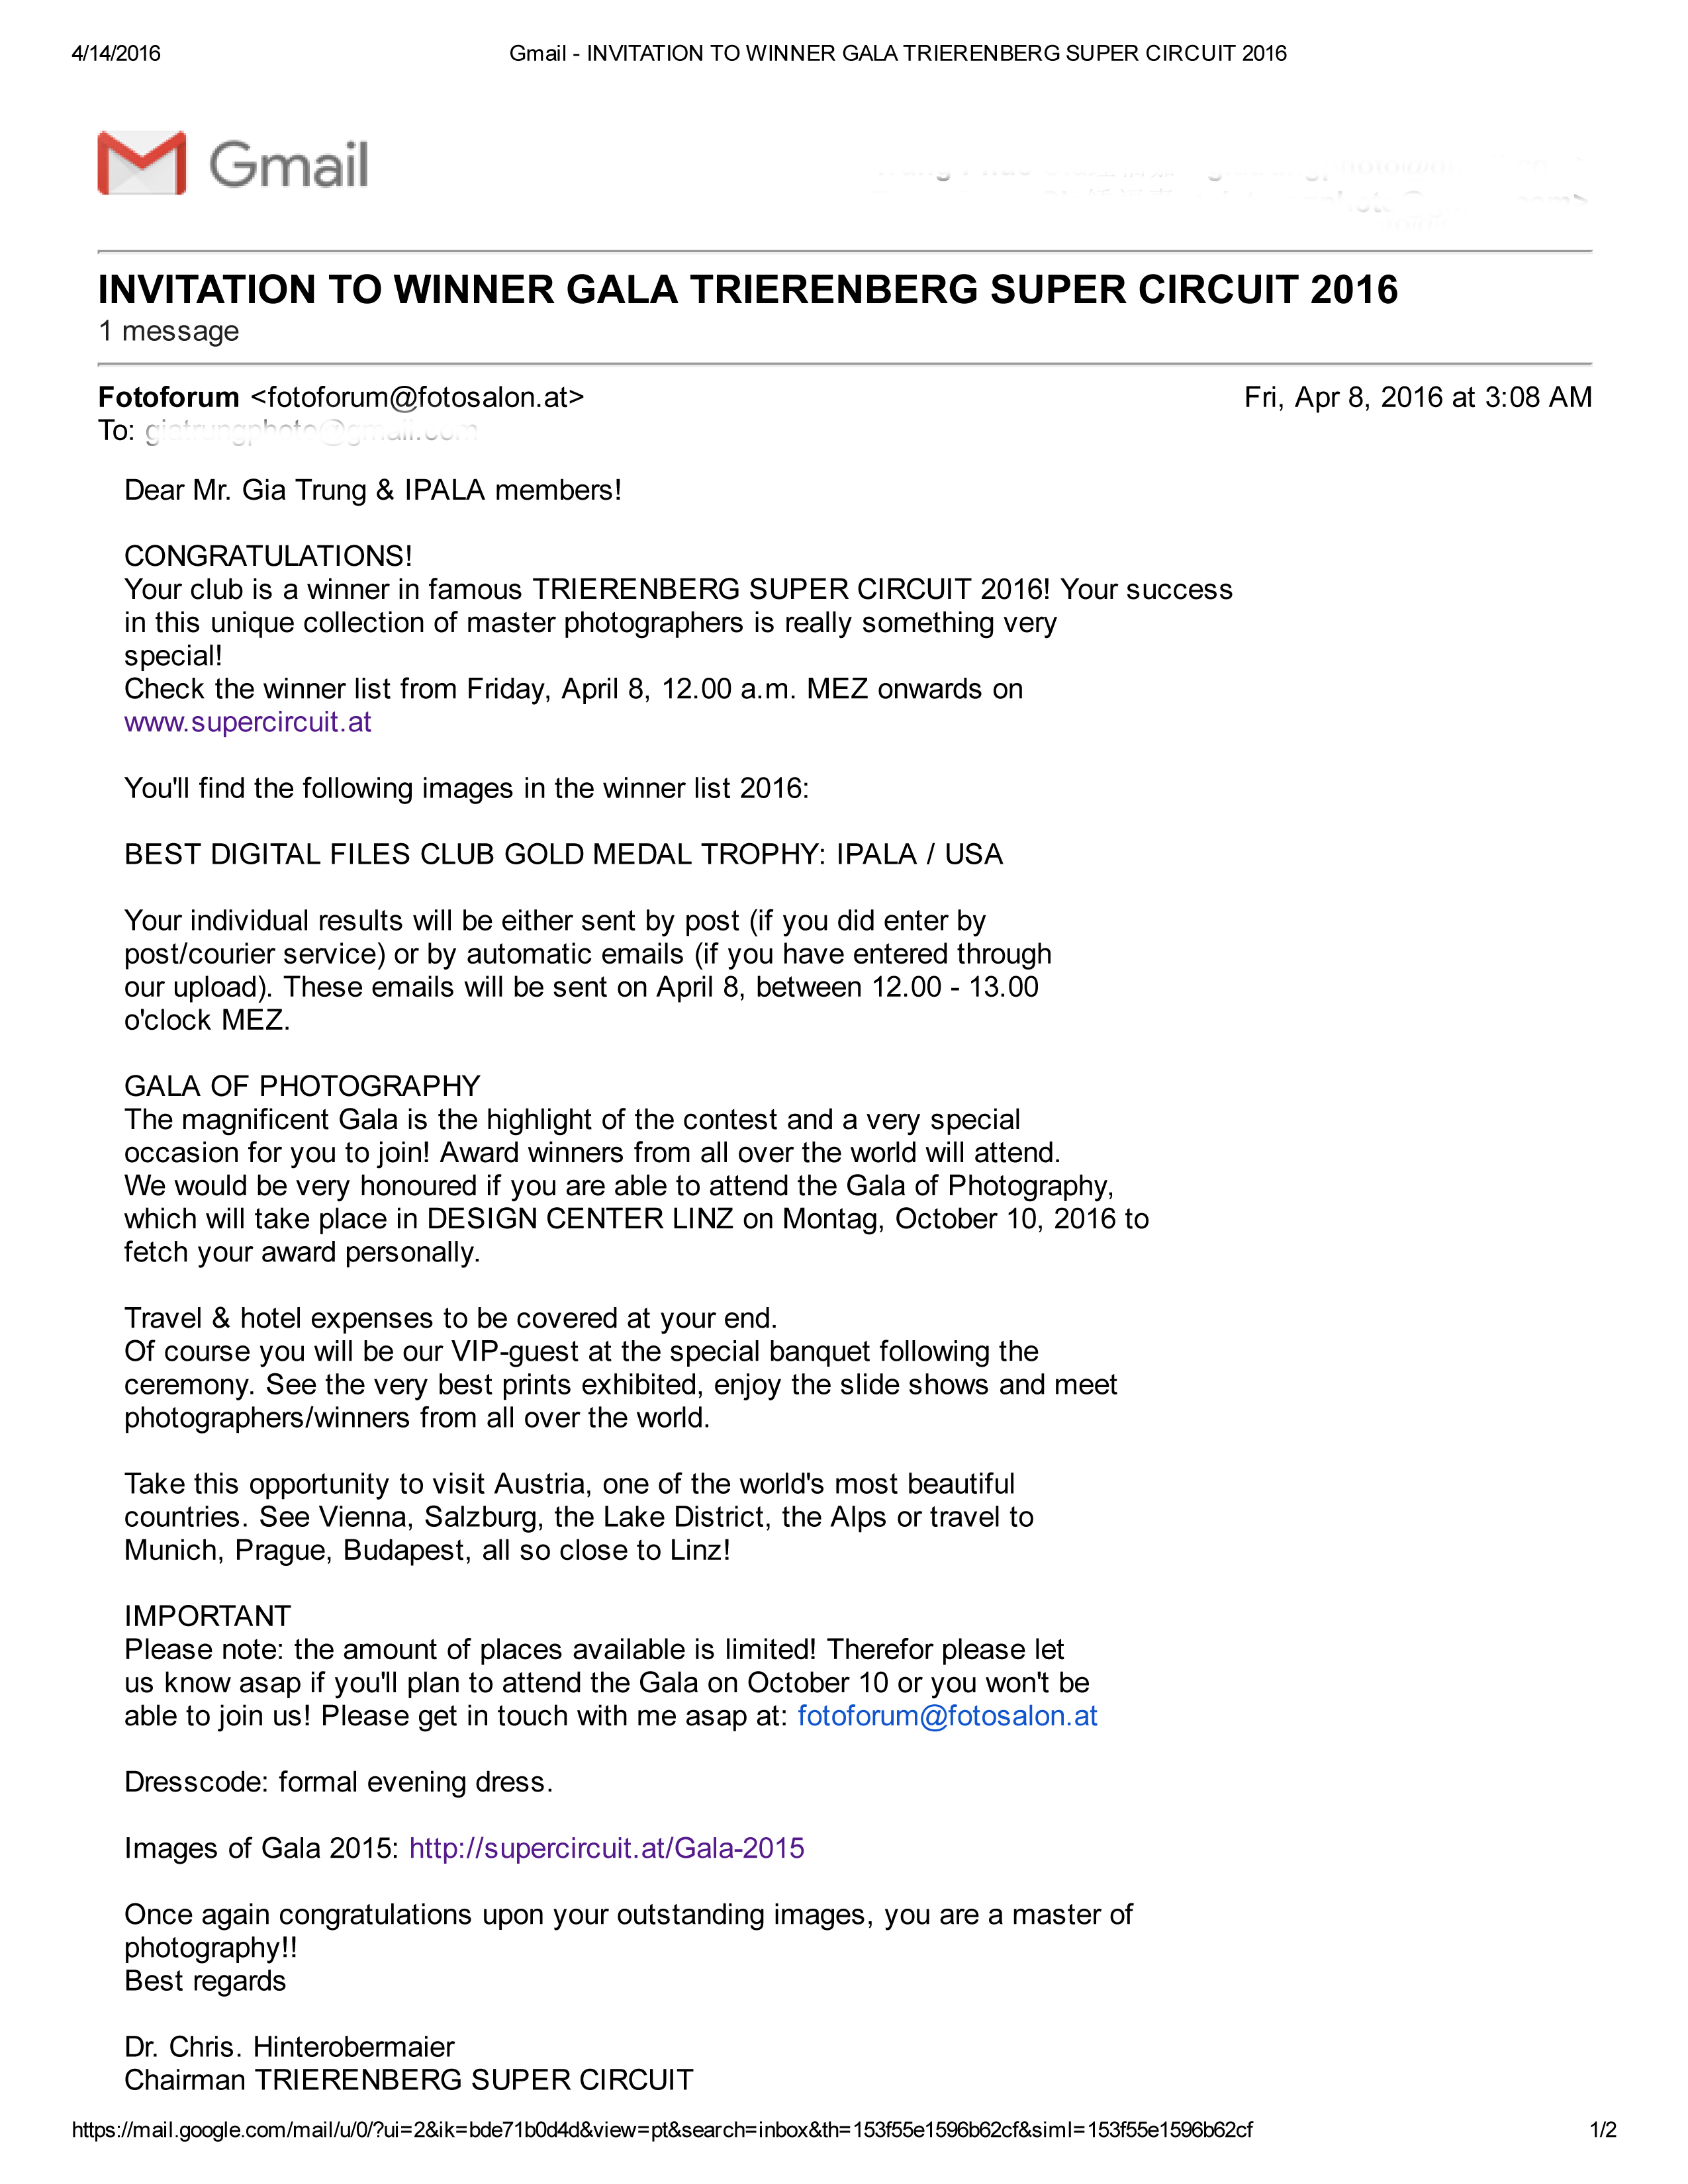 Gmail - INVITATION TO WINNER GALA TRIERENBERG SUPER CIRCUIT 2016-1.jpg